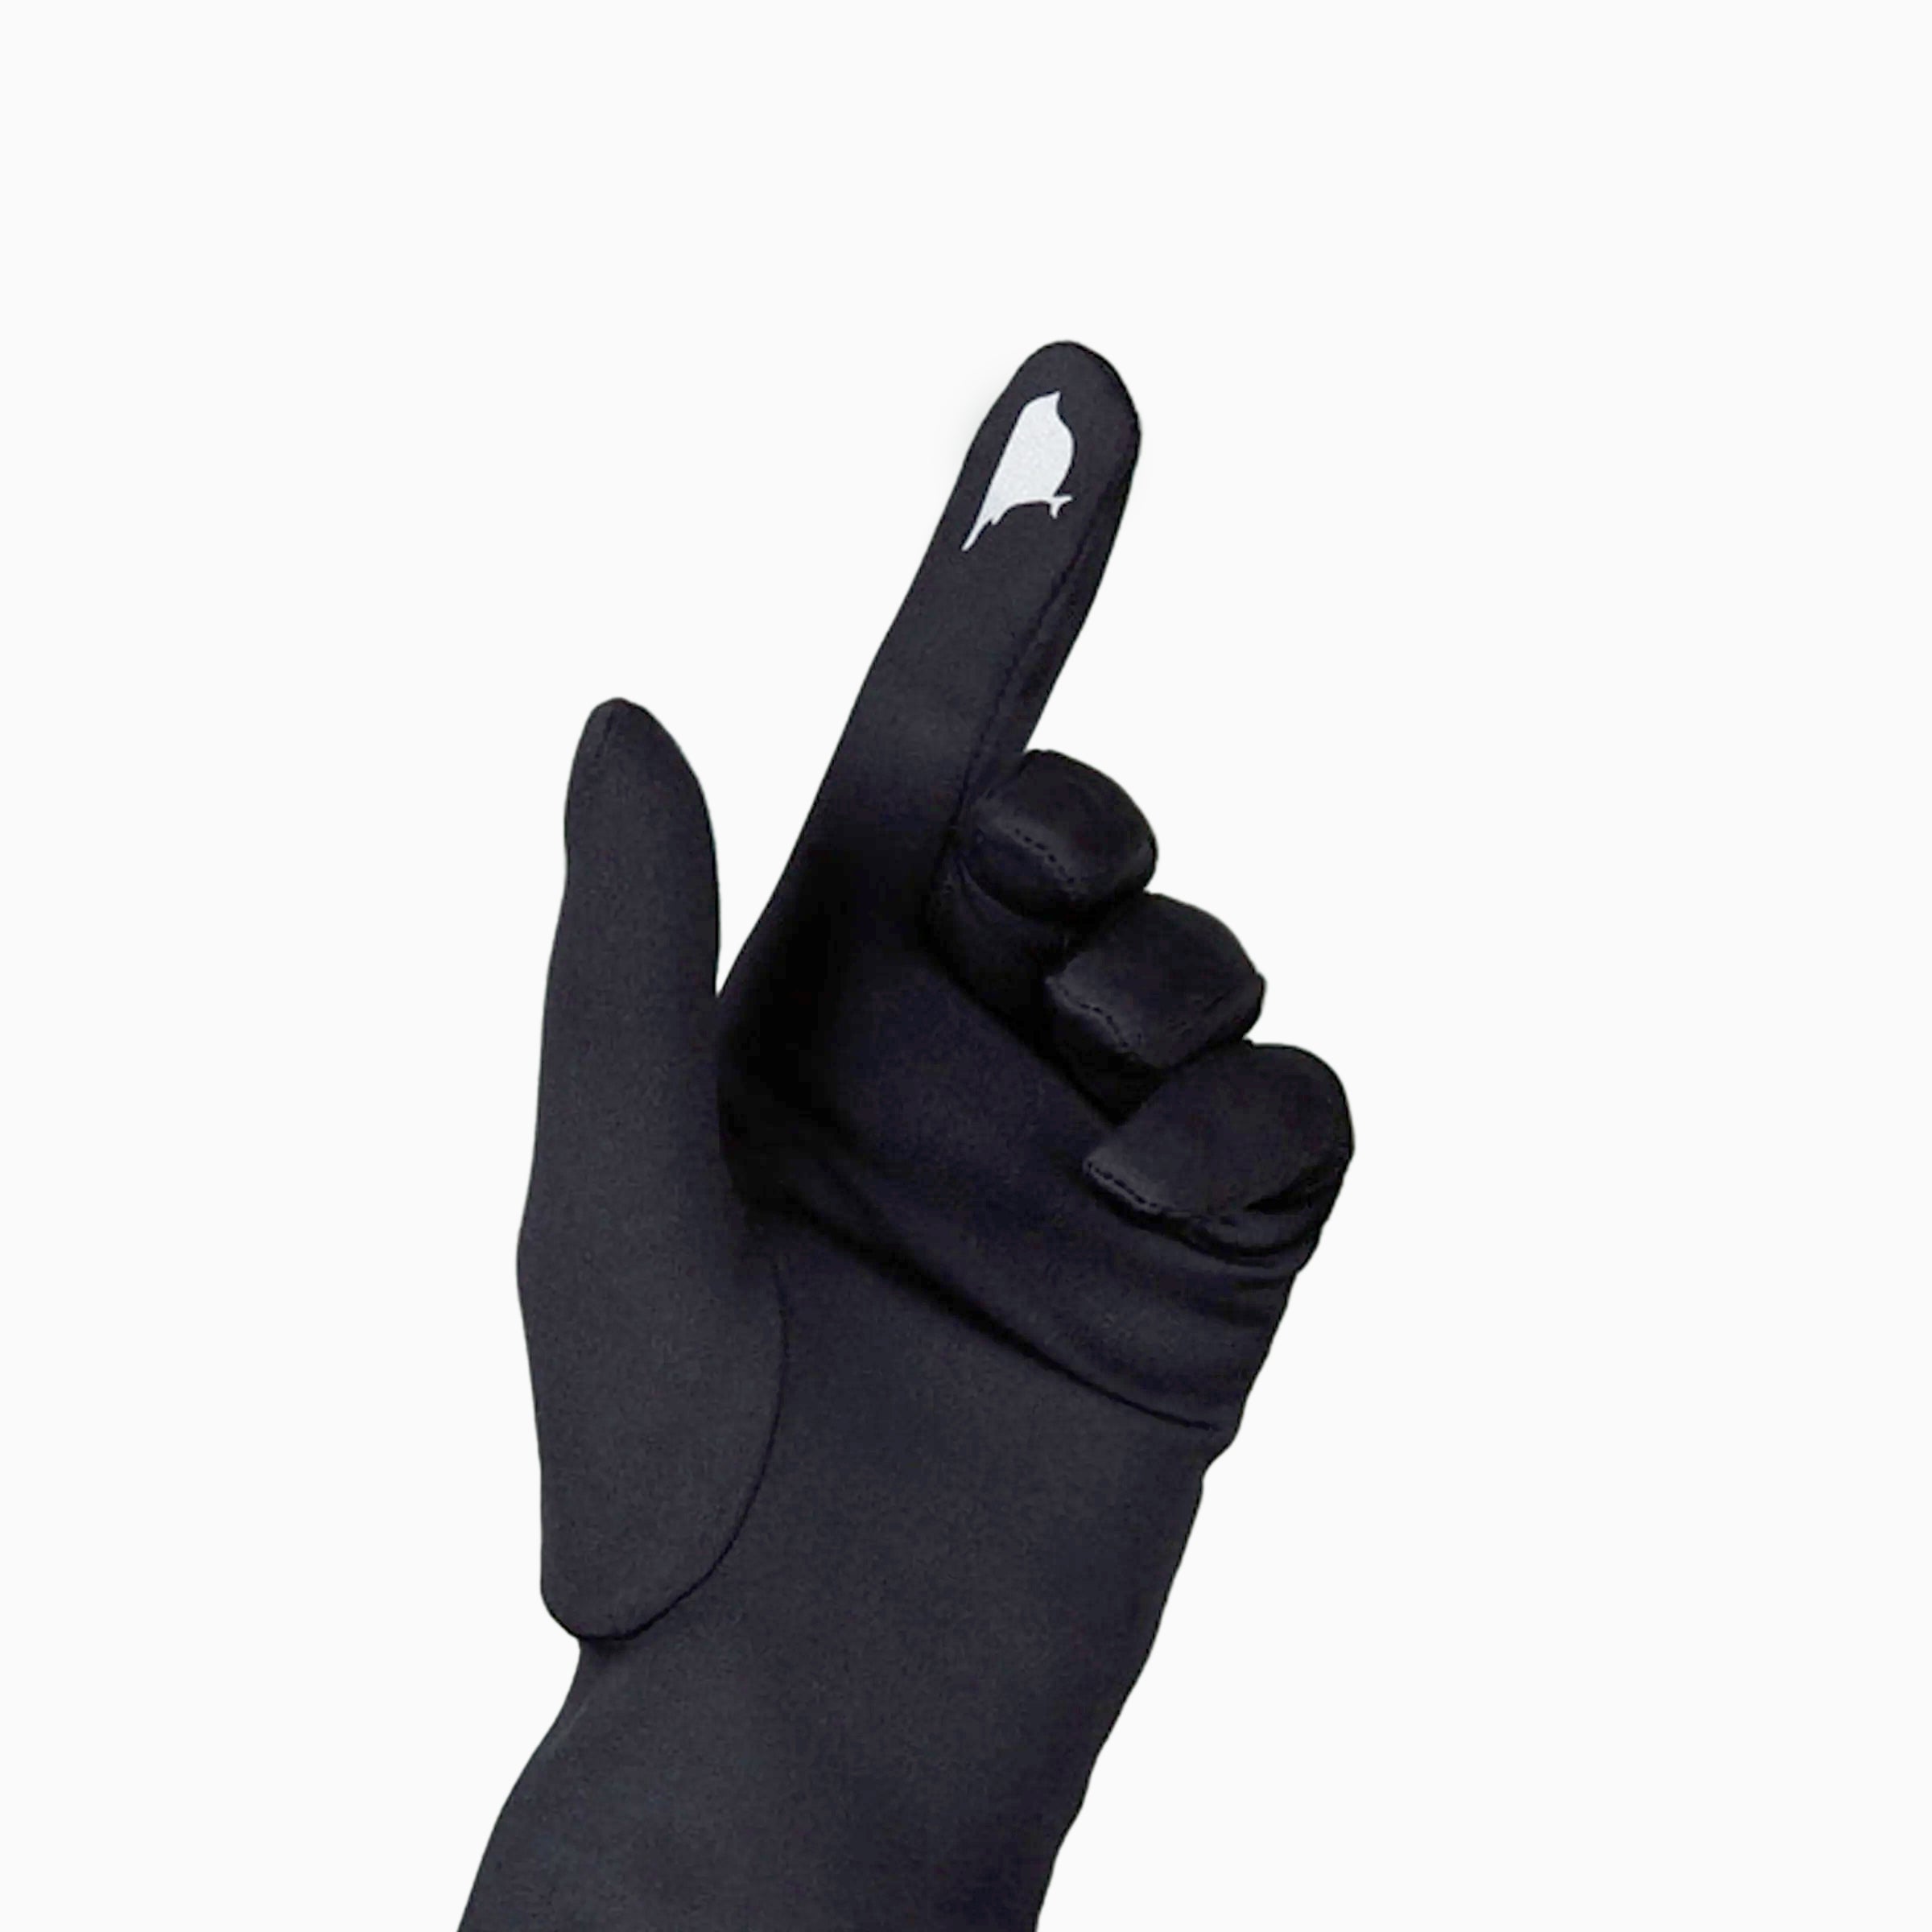 Black women&#39;s glove against white background showing technology friendly index finger.